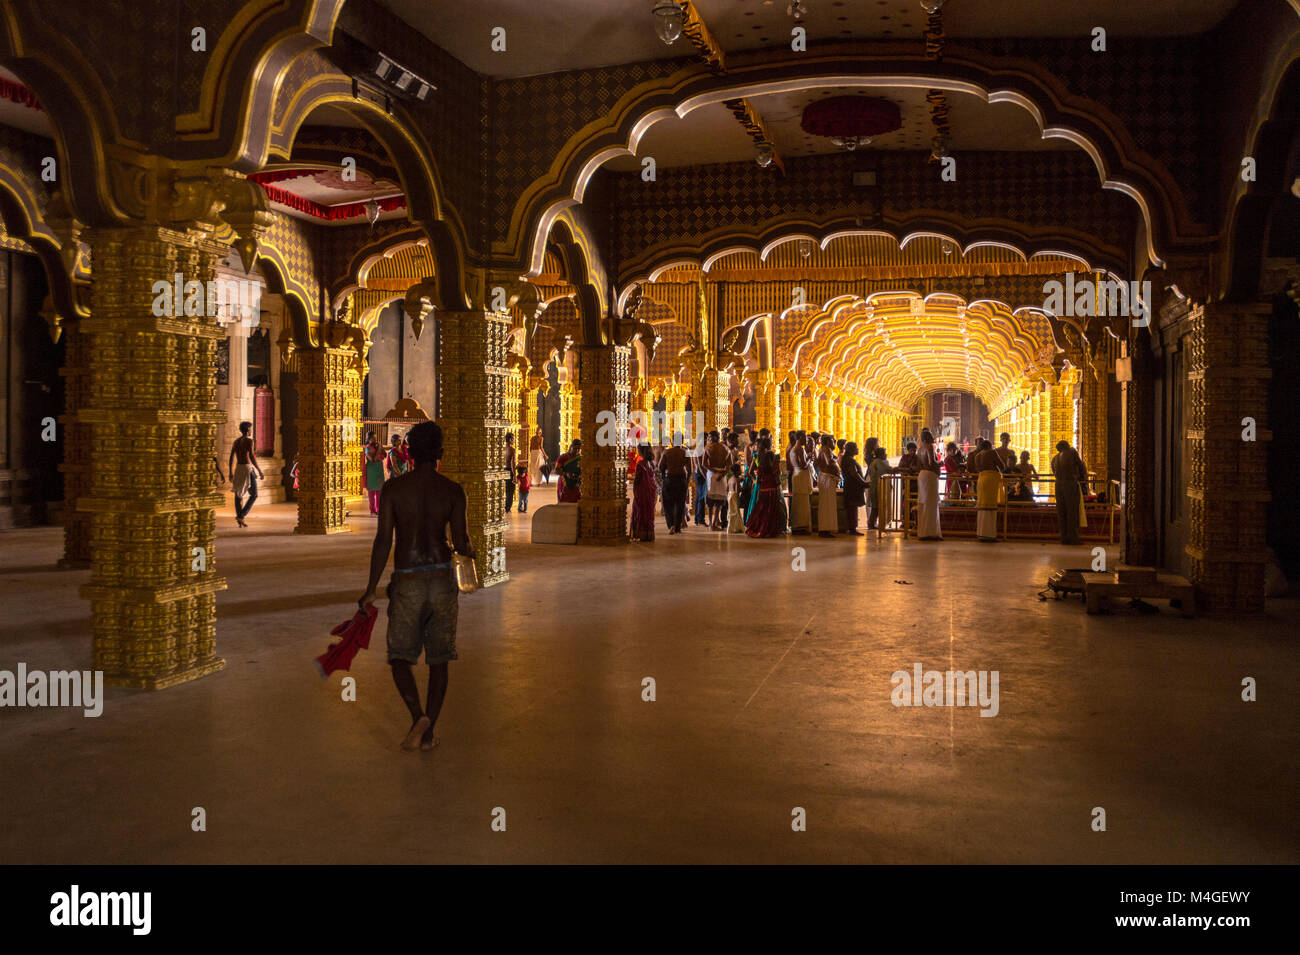 Srilanka,Asie,jaffna,temple Nallur Kandaswamy Banque D'Images